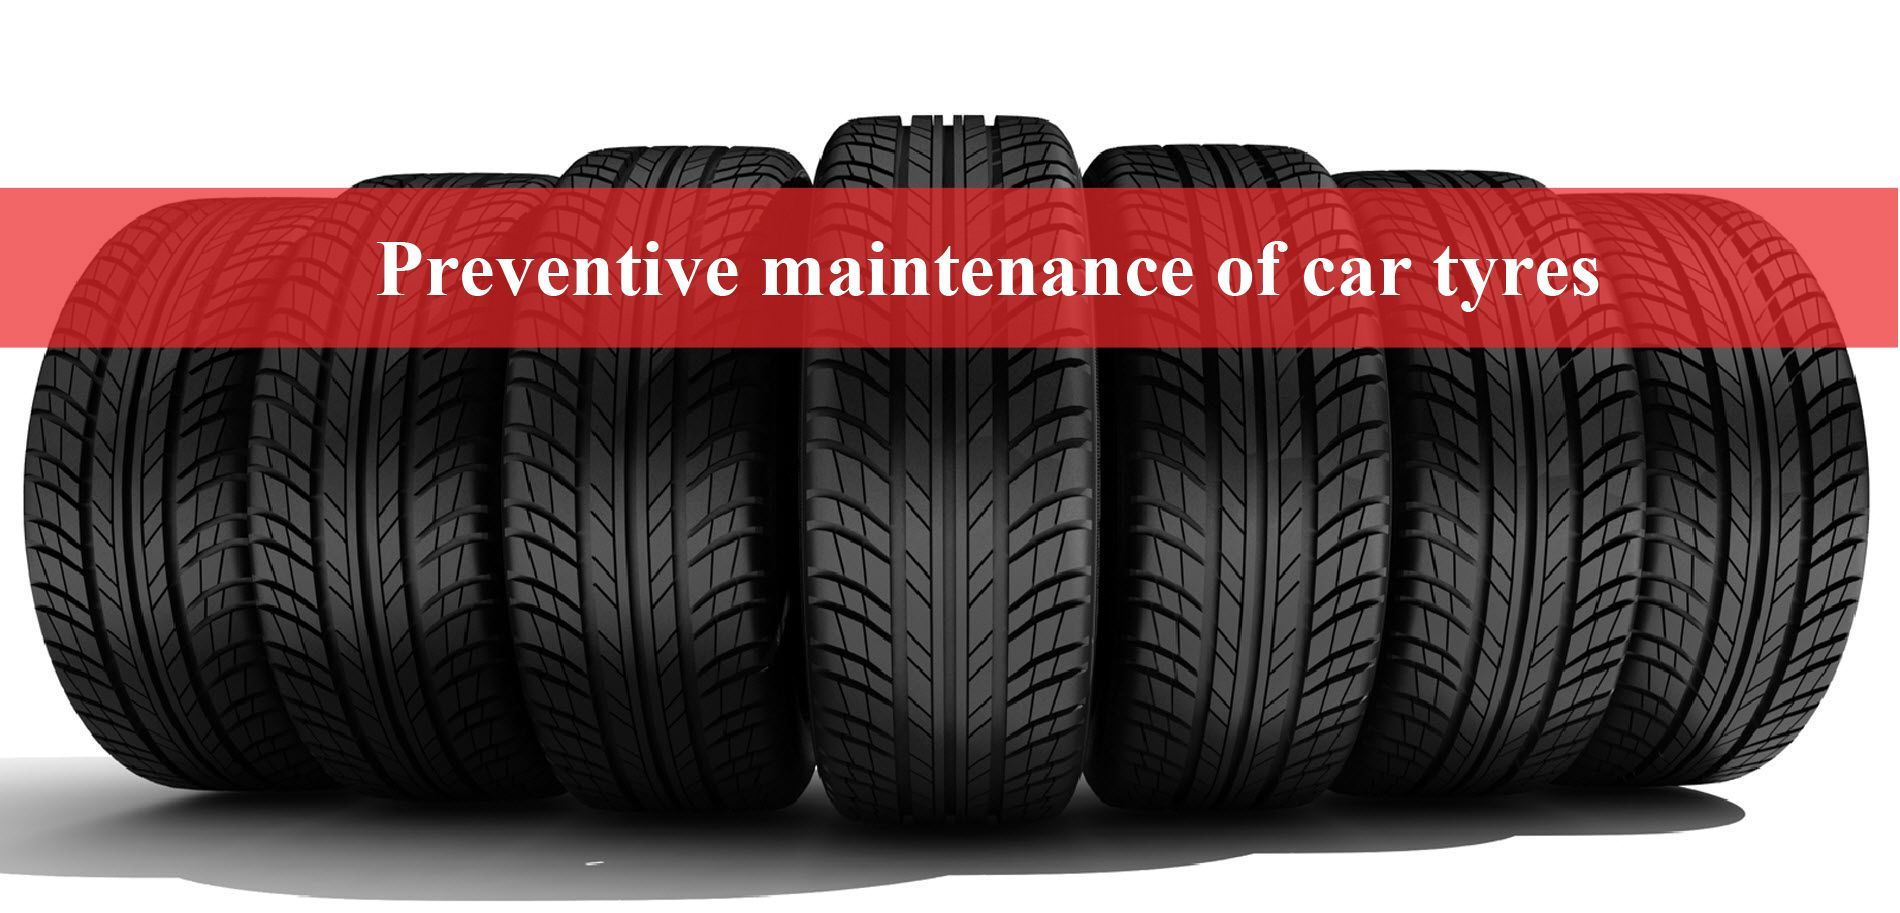 Preventive maintenance of tyres